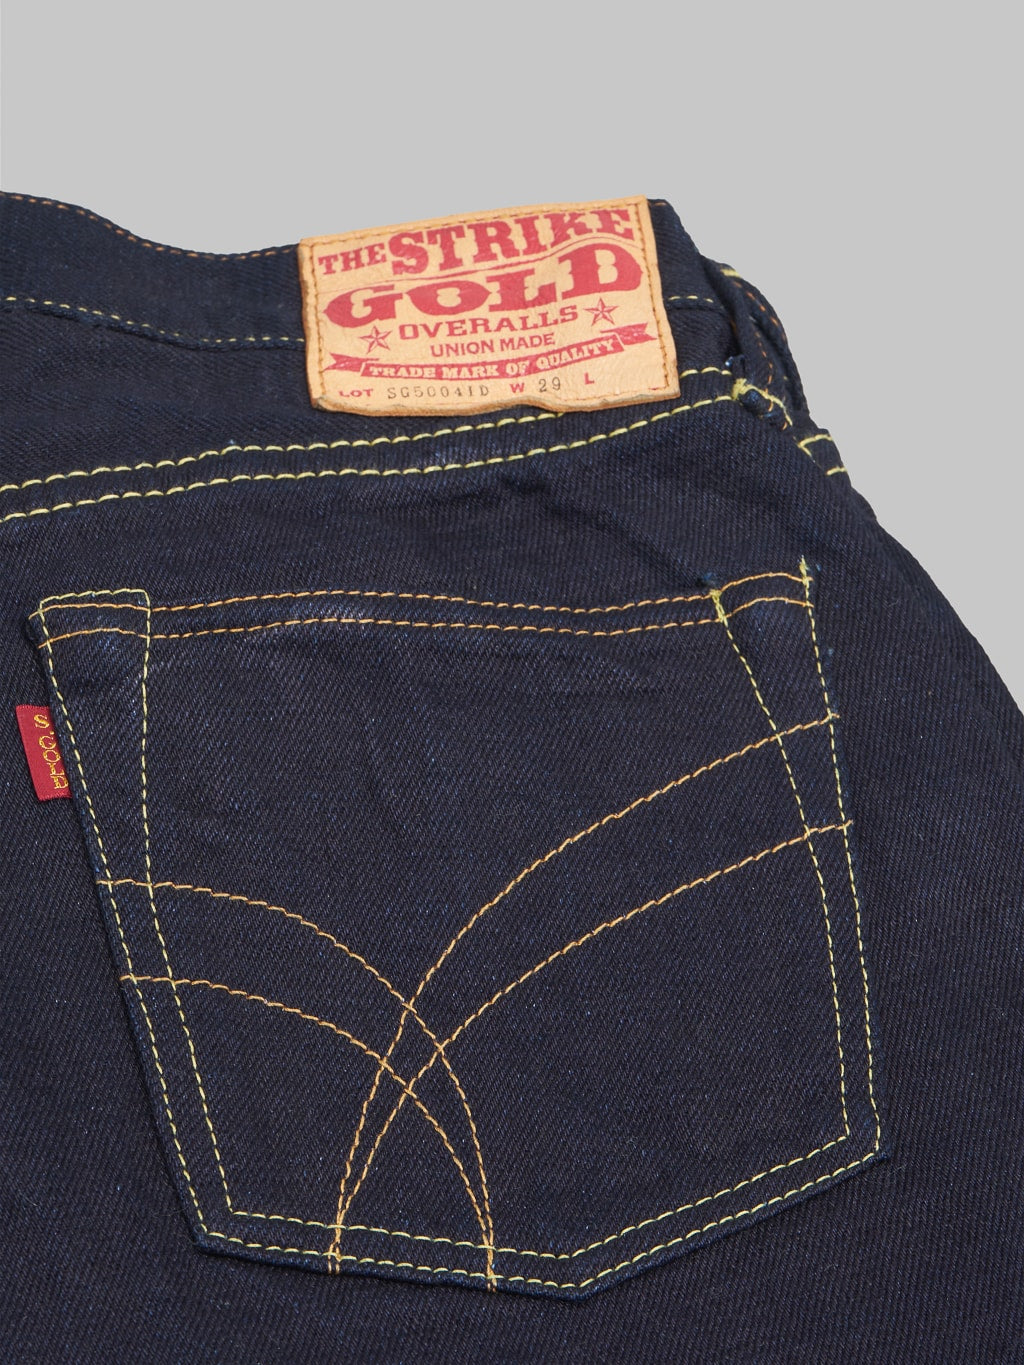 The Strike Gold 5004ID double indigo selvedge jeans pocket arcs